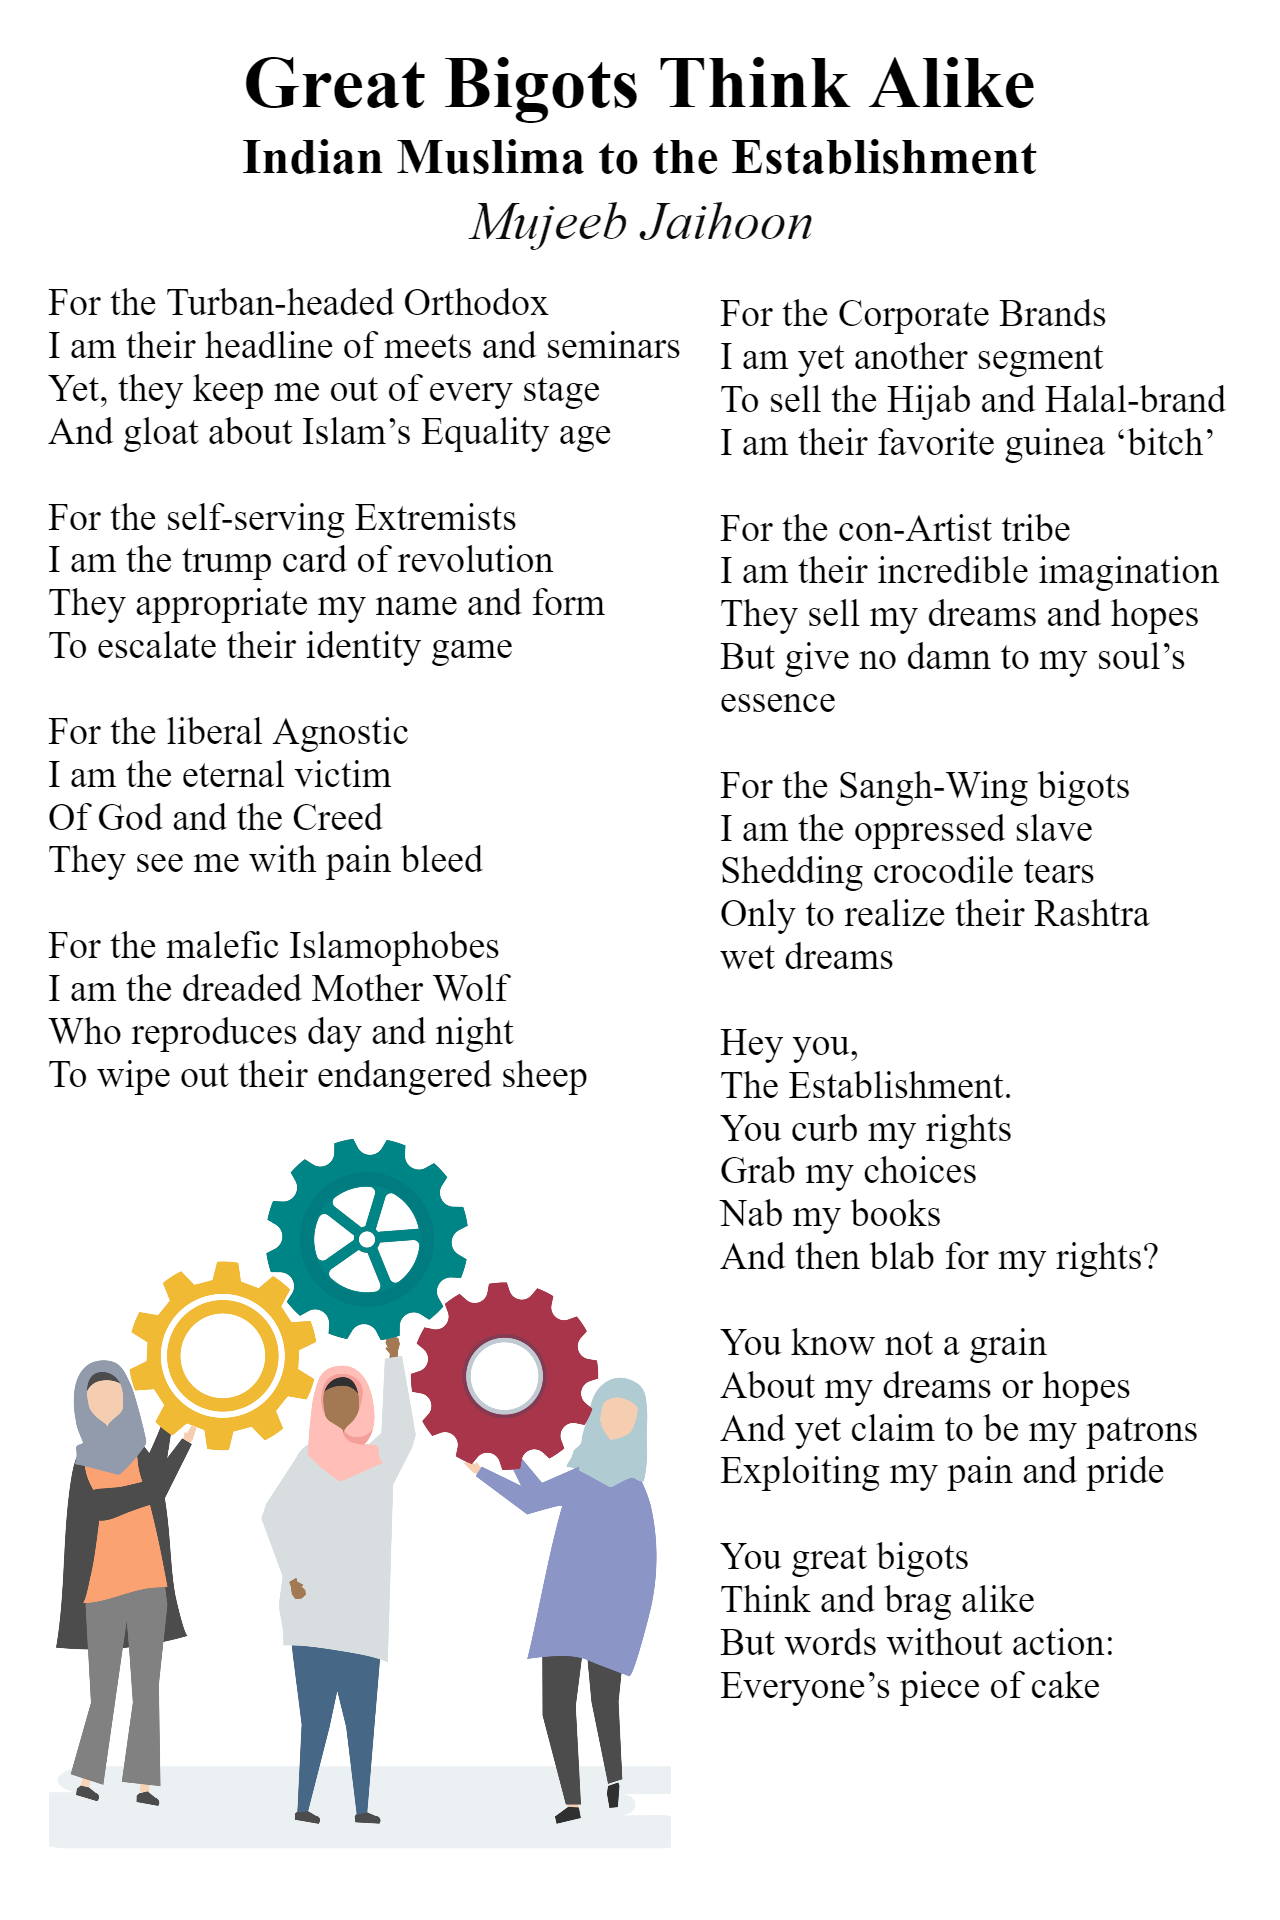 Great Bigots Thank Alike - poem by Mujeeb Jaihoon